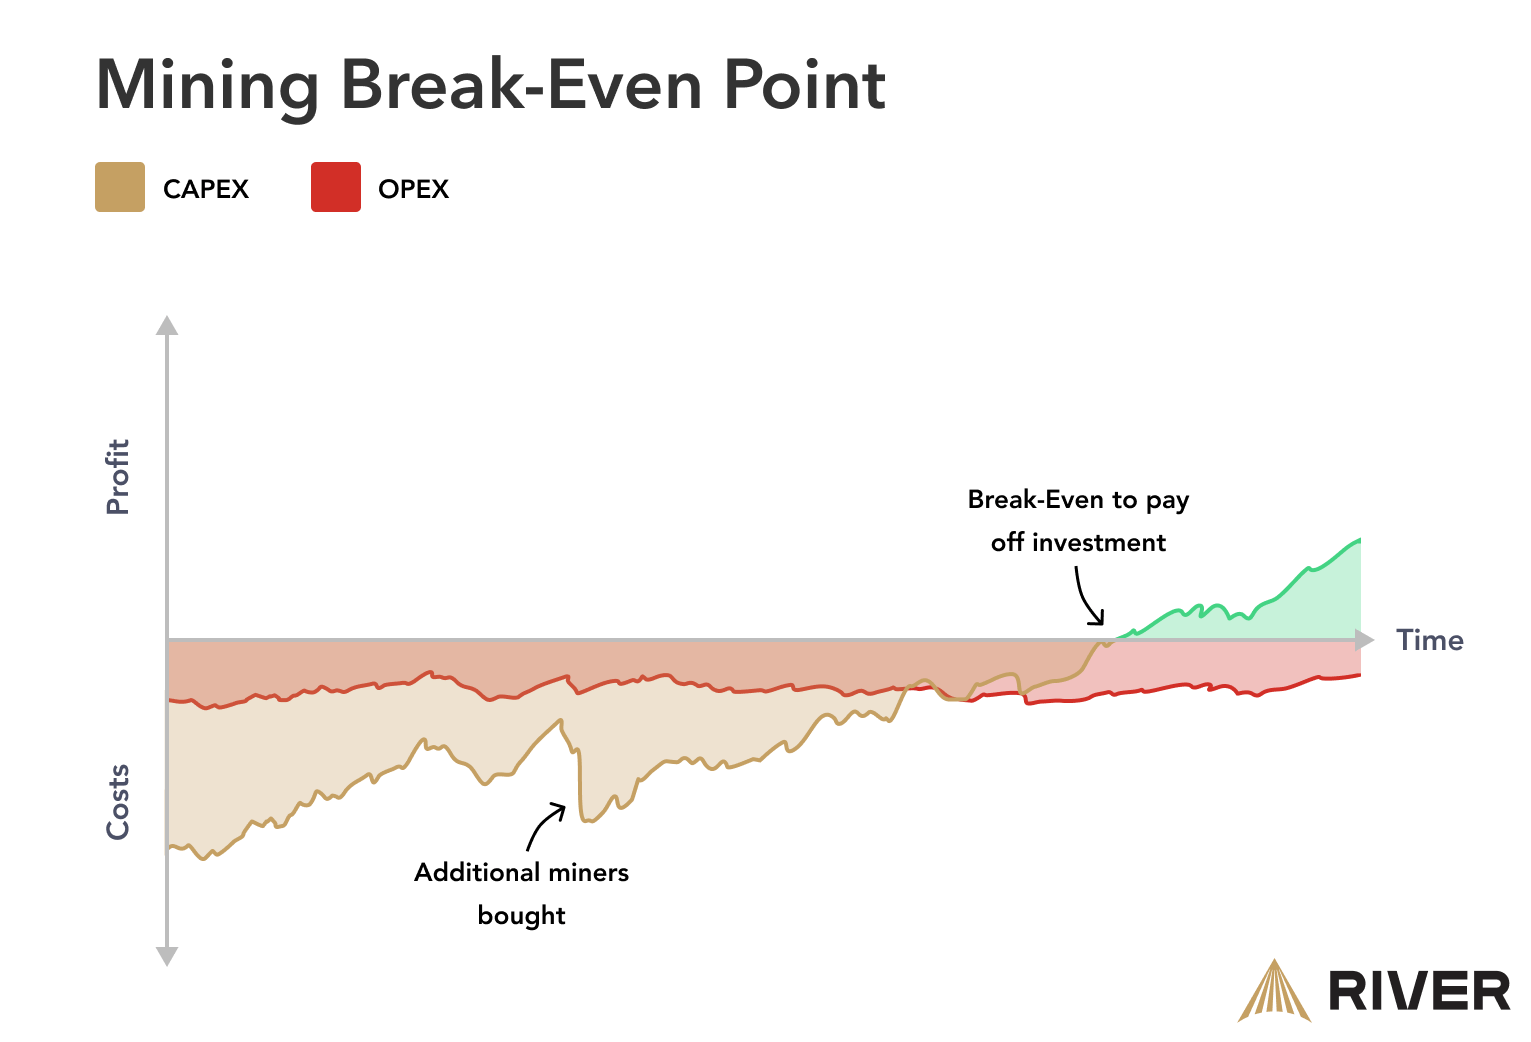 Mining break-even point